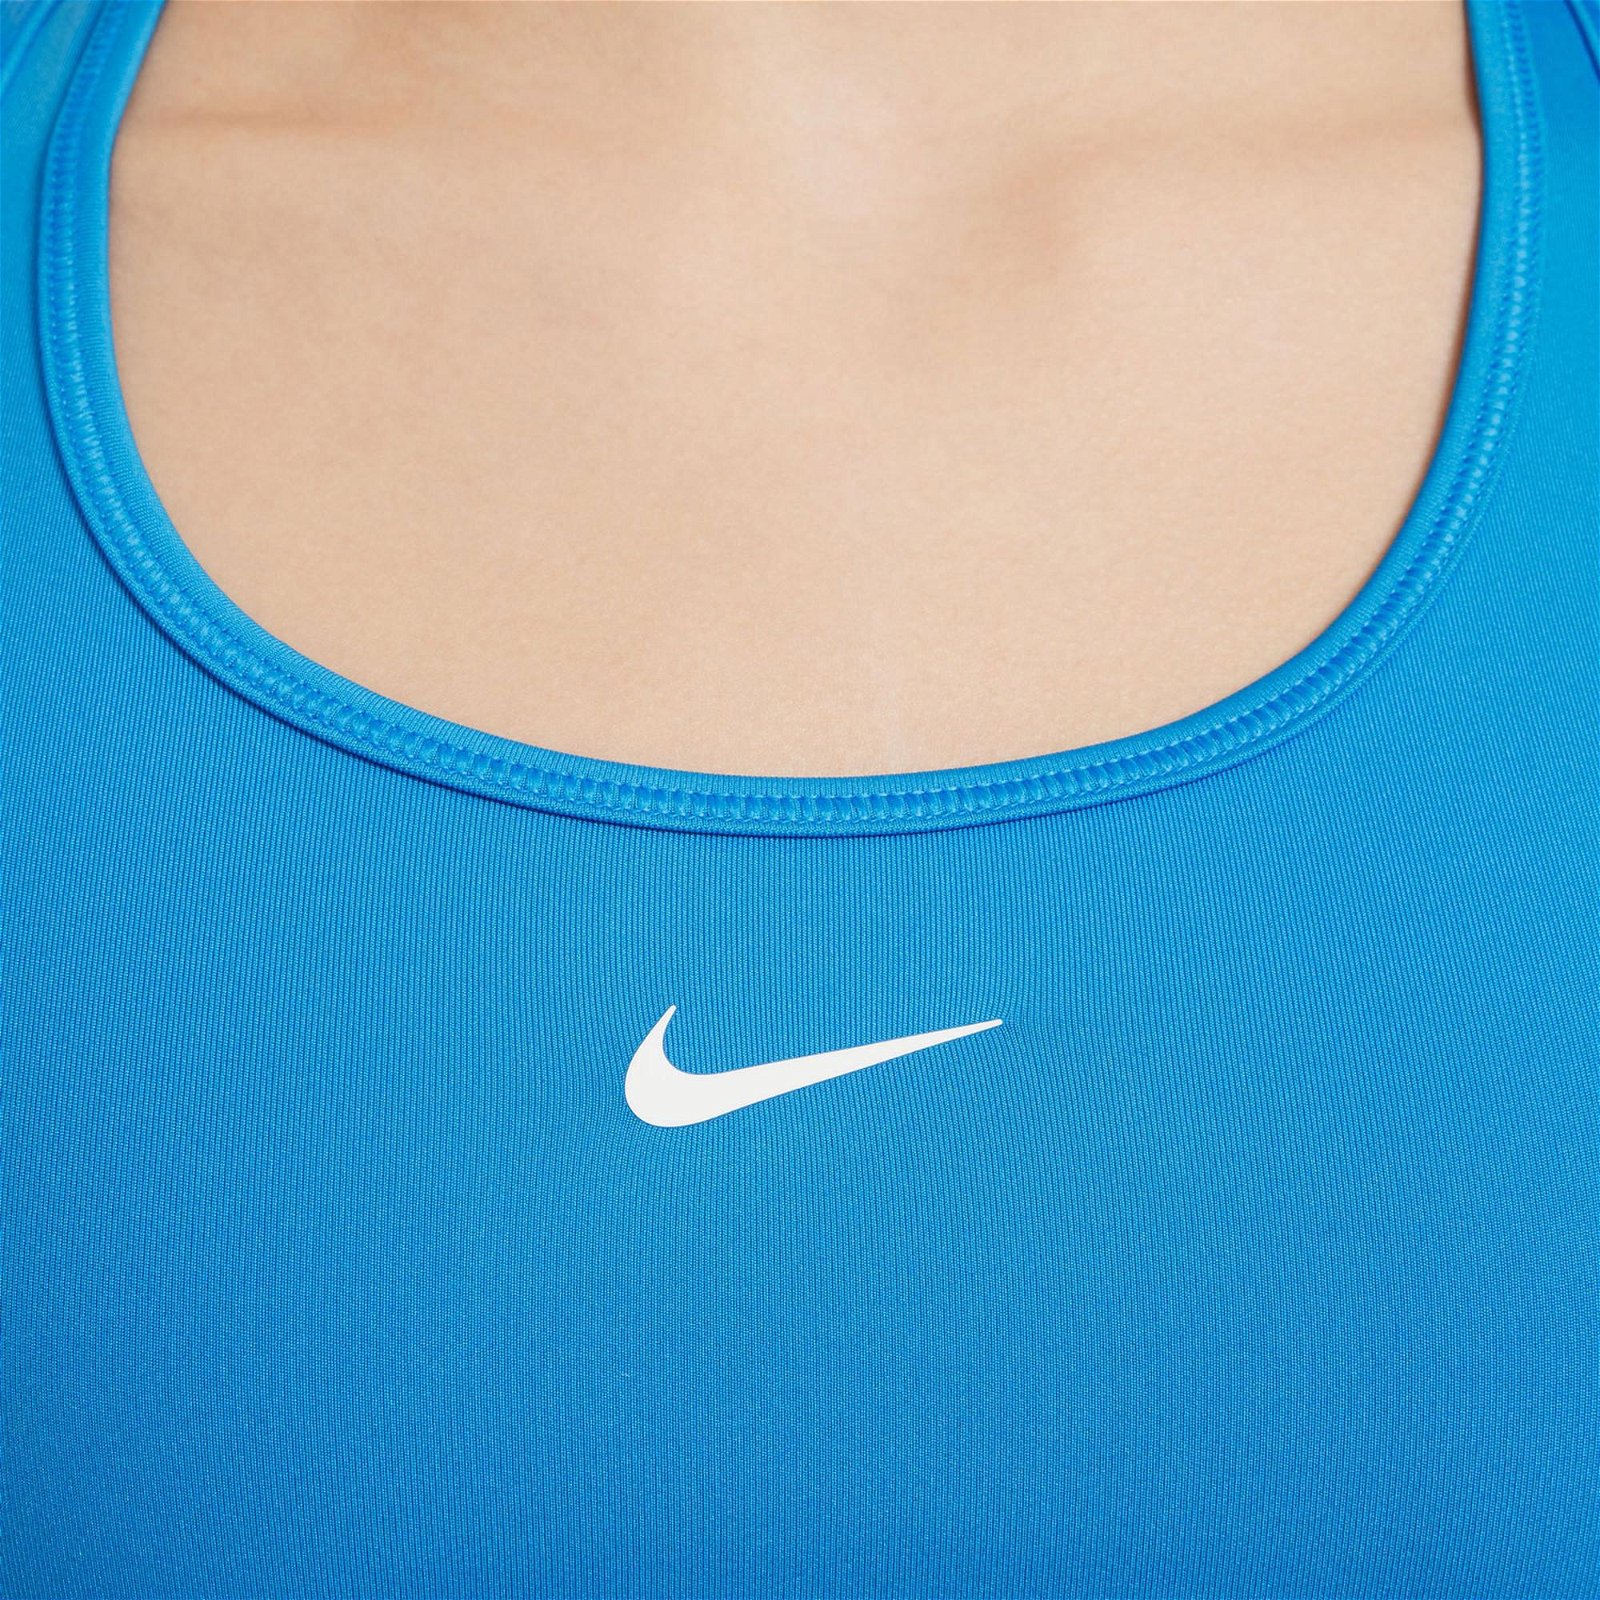 Nike Dri-Fit Swoosh Çocuk Mavi Bra